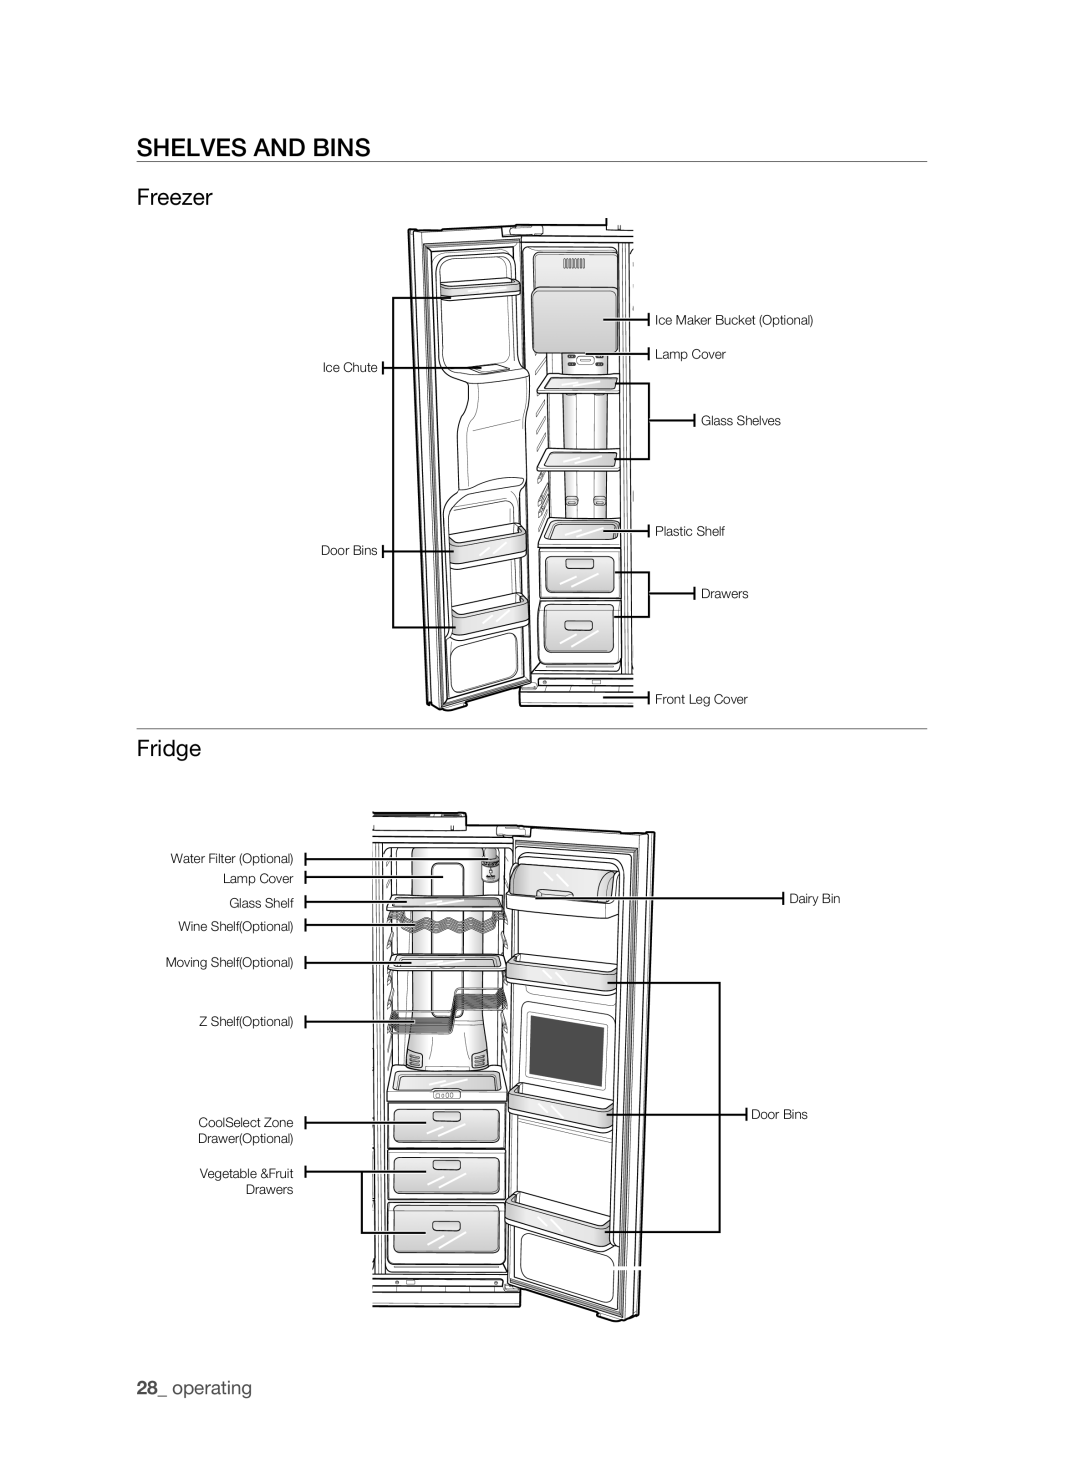 Samsung SRS610HDSS Shelves and bins, Freezer, Fridge, operating, Ice Chute Door Bins, Drawers Front Leg Cover, Dairy Bin 